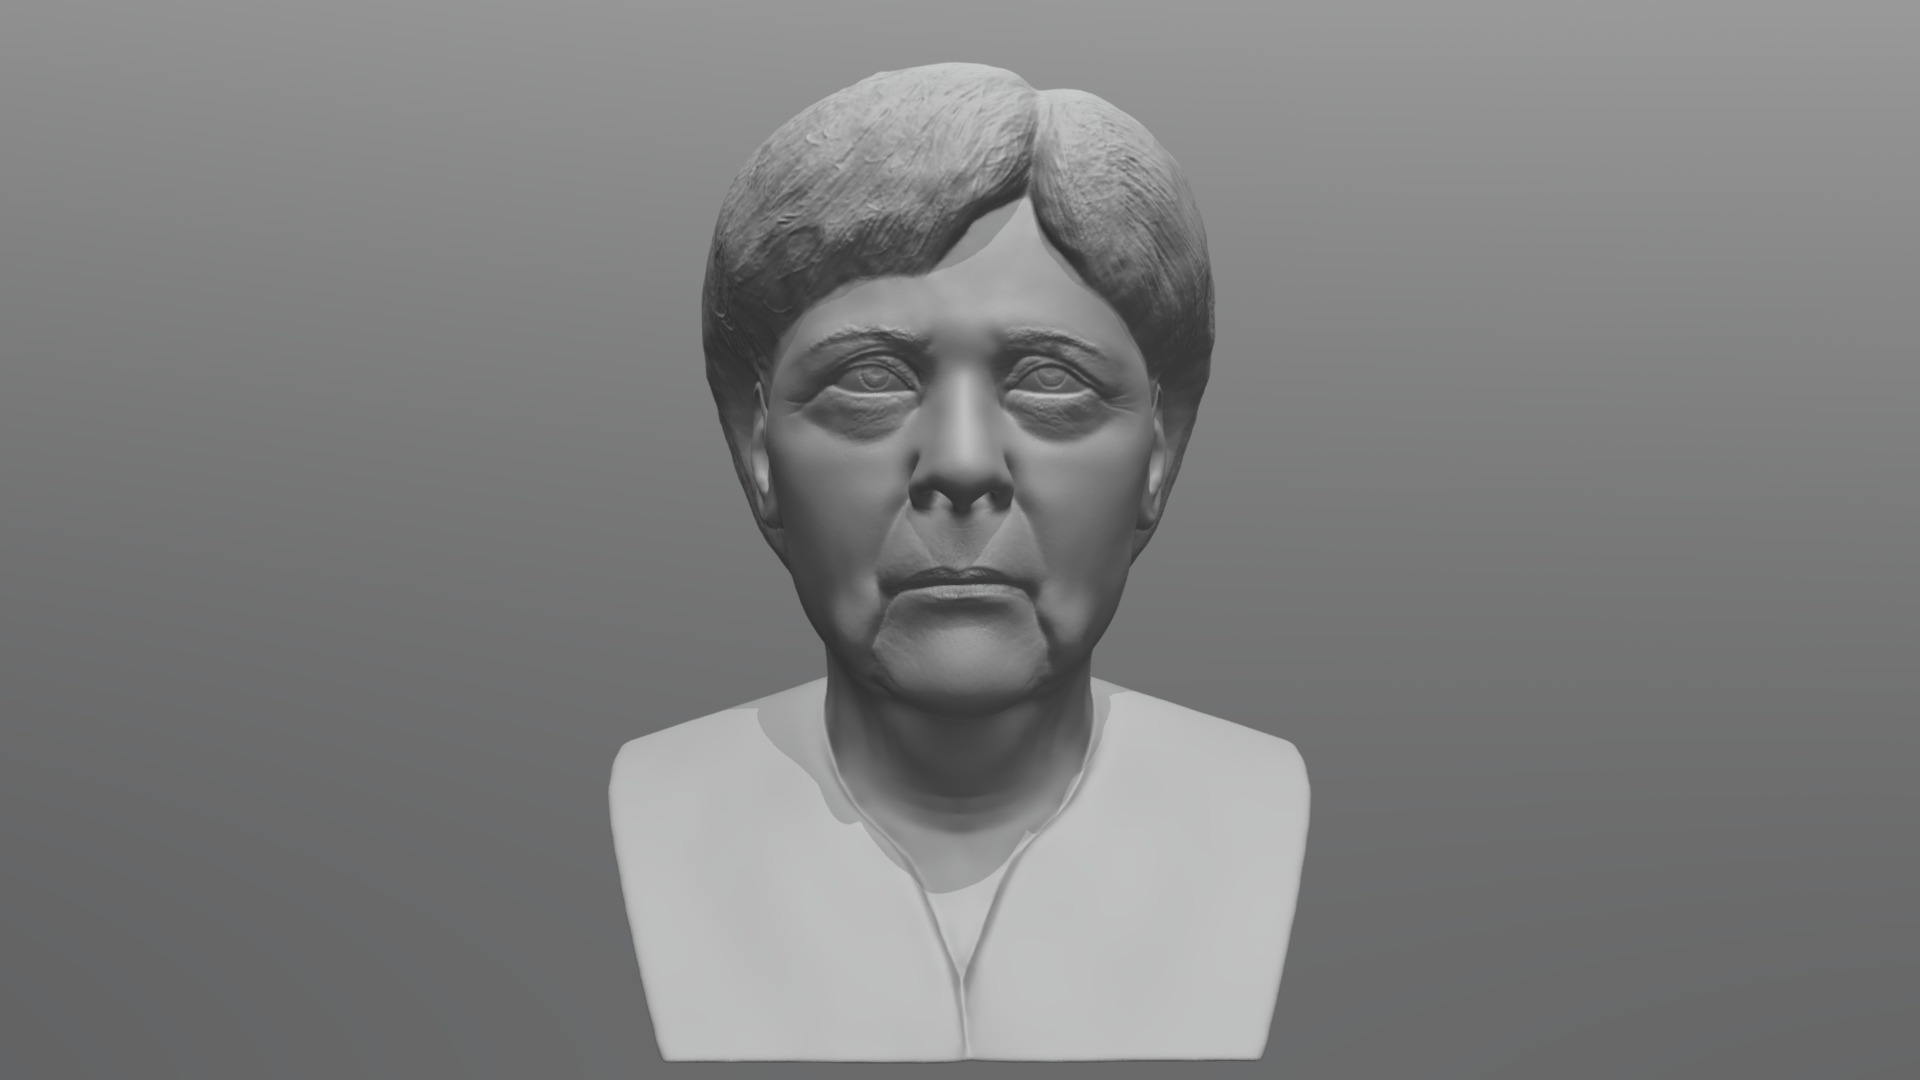 3D model Angela Merkel bust 3D printing ready - This is a 3D model of the Angela Merkel bust 3D printing ready. The 3D model is about a man with a surprised expression.